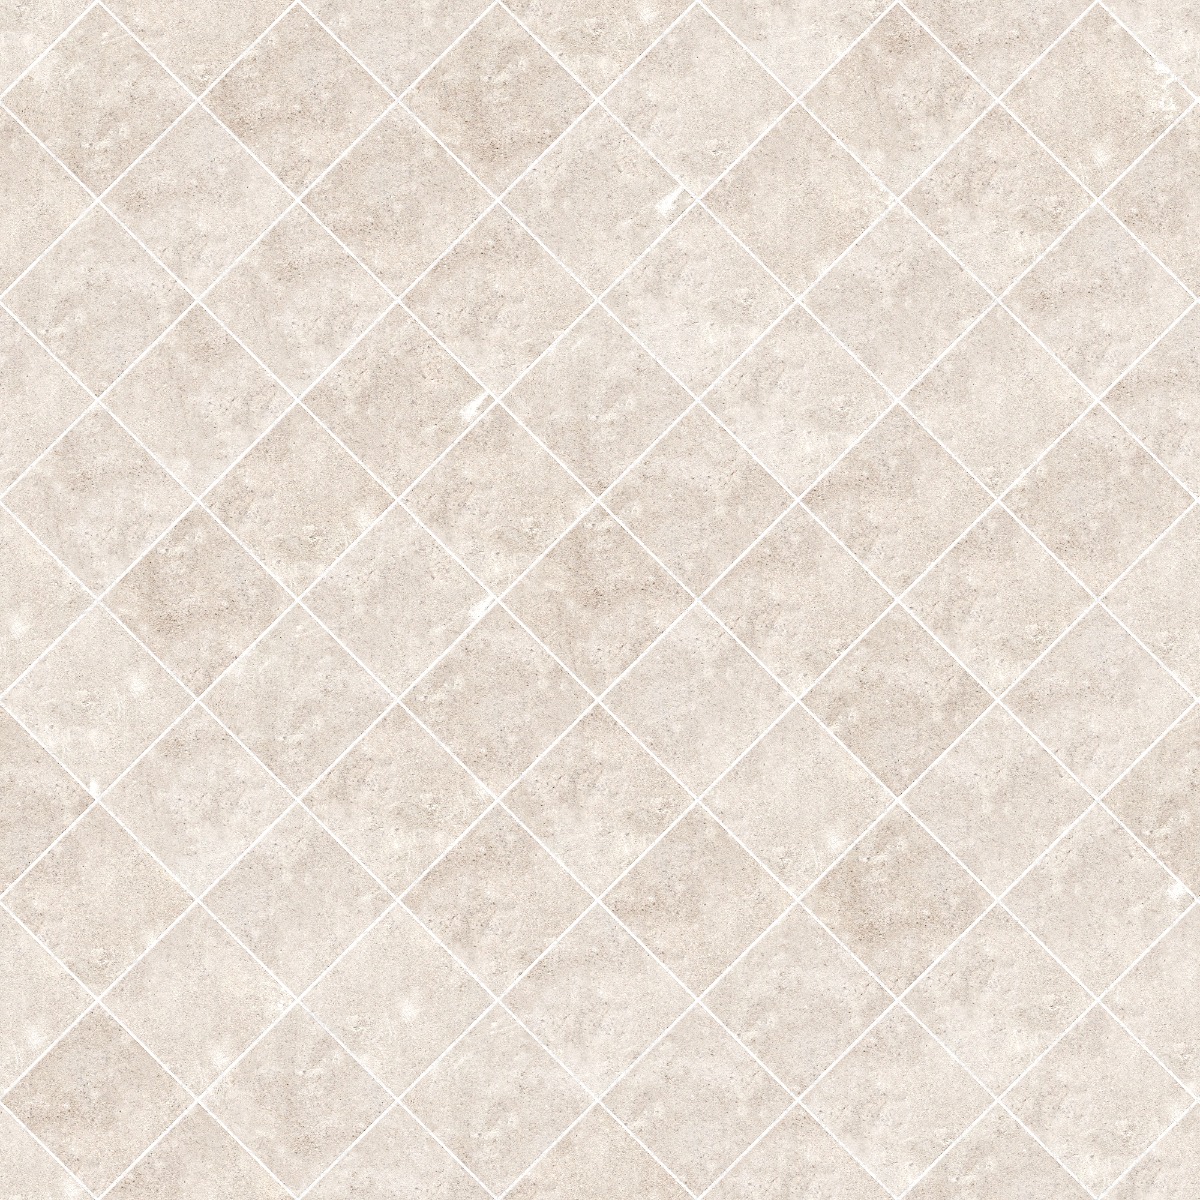 A seamless stone texture with limestone blocks arranged in a Diamond pattern